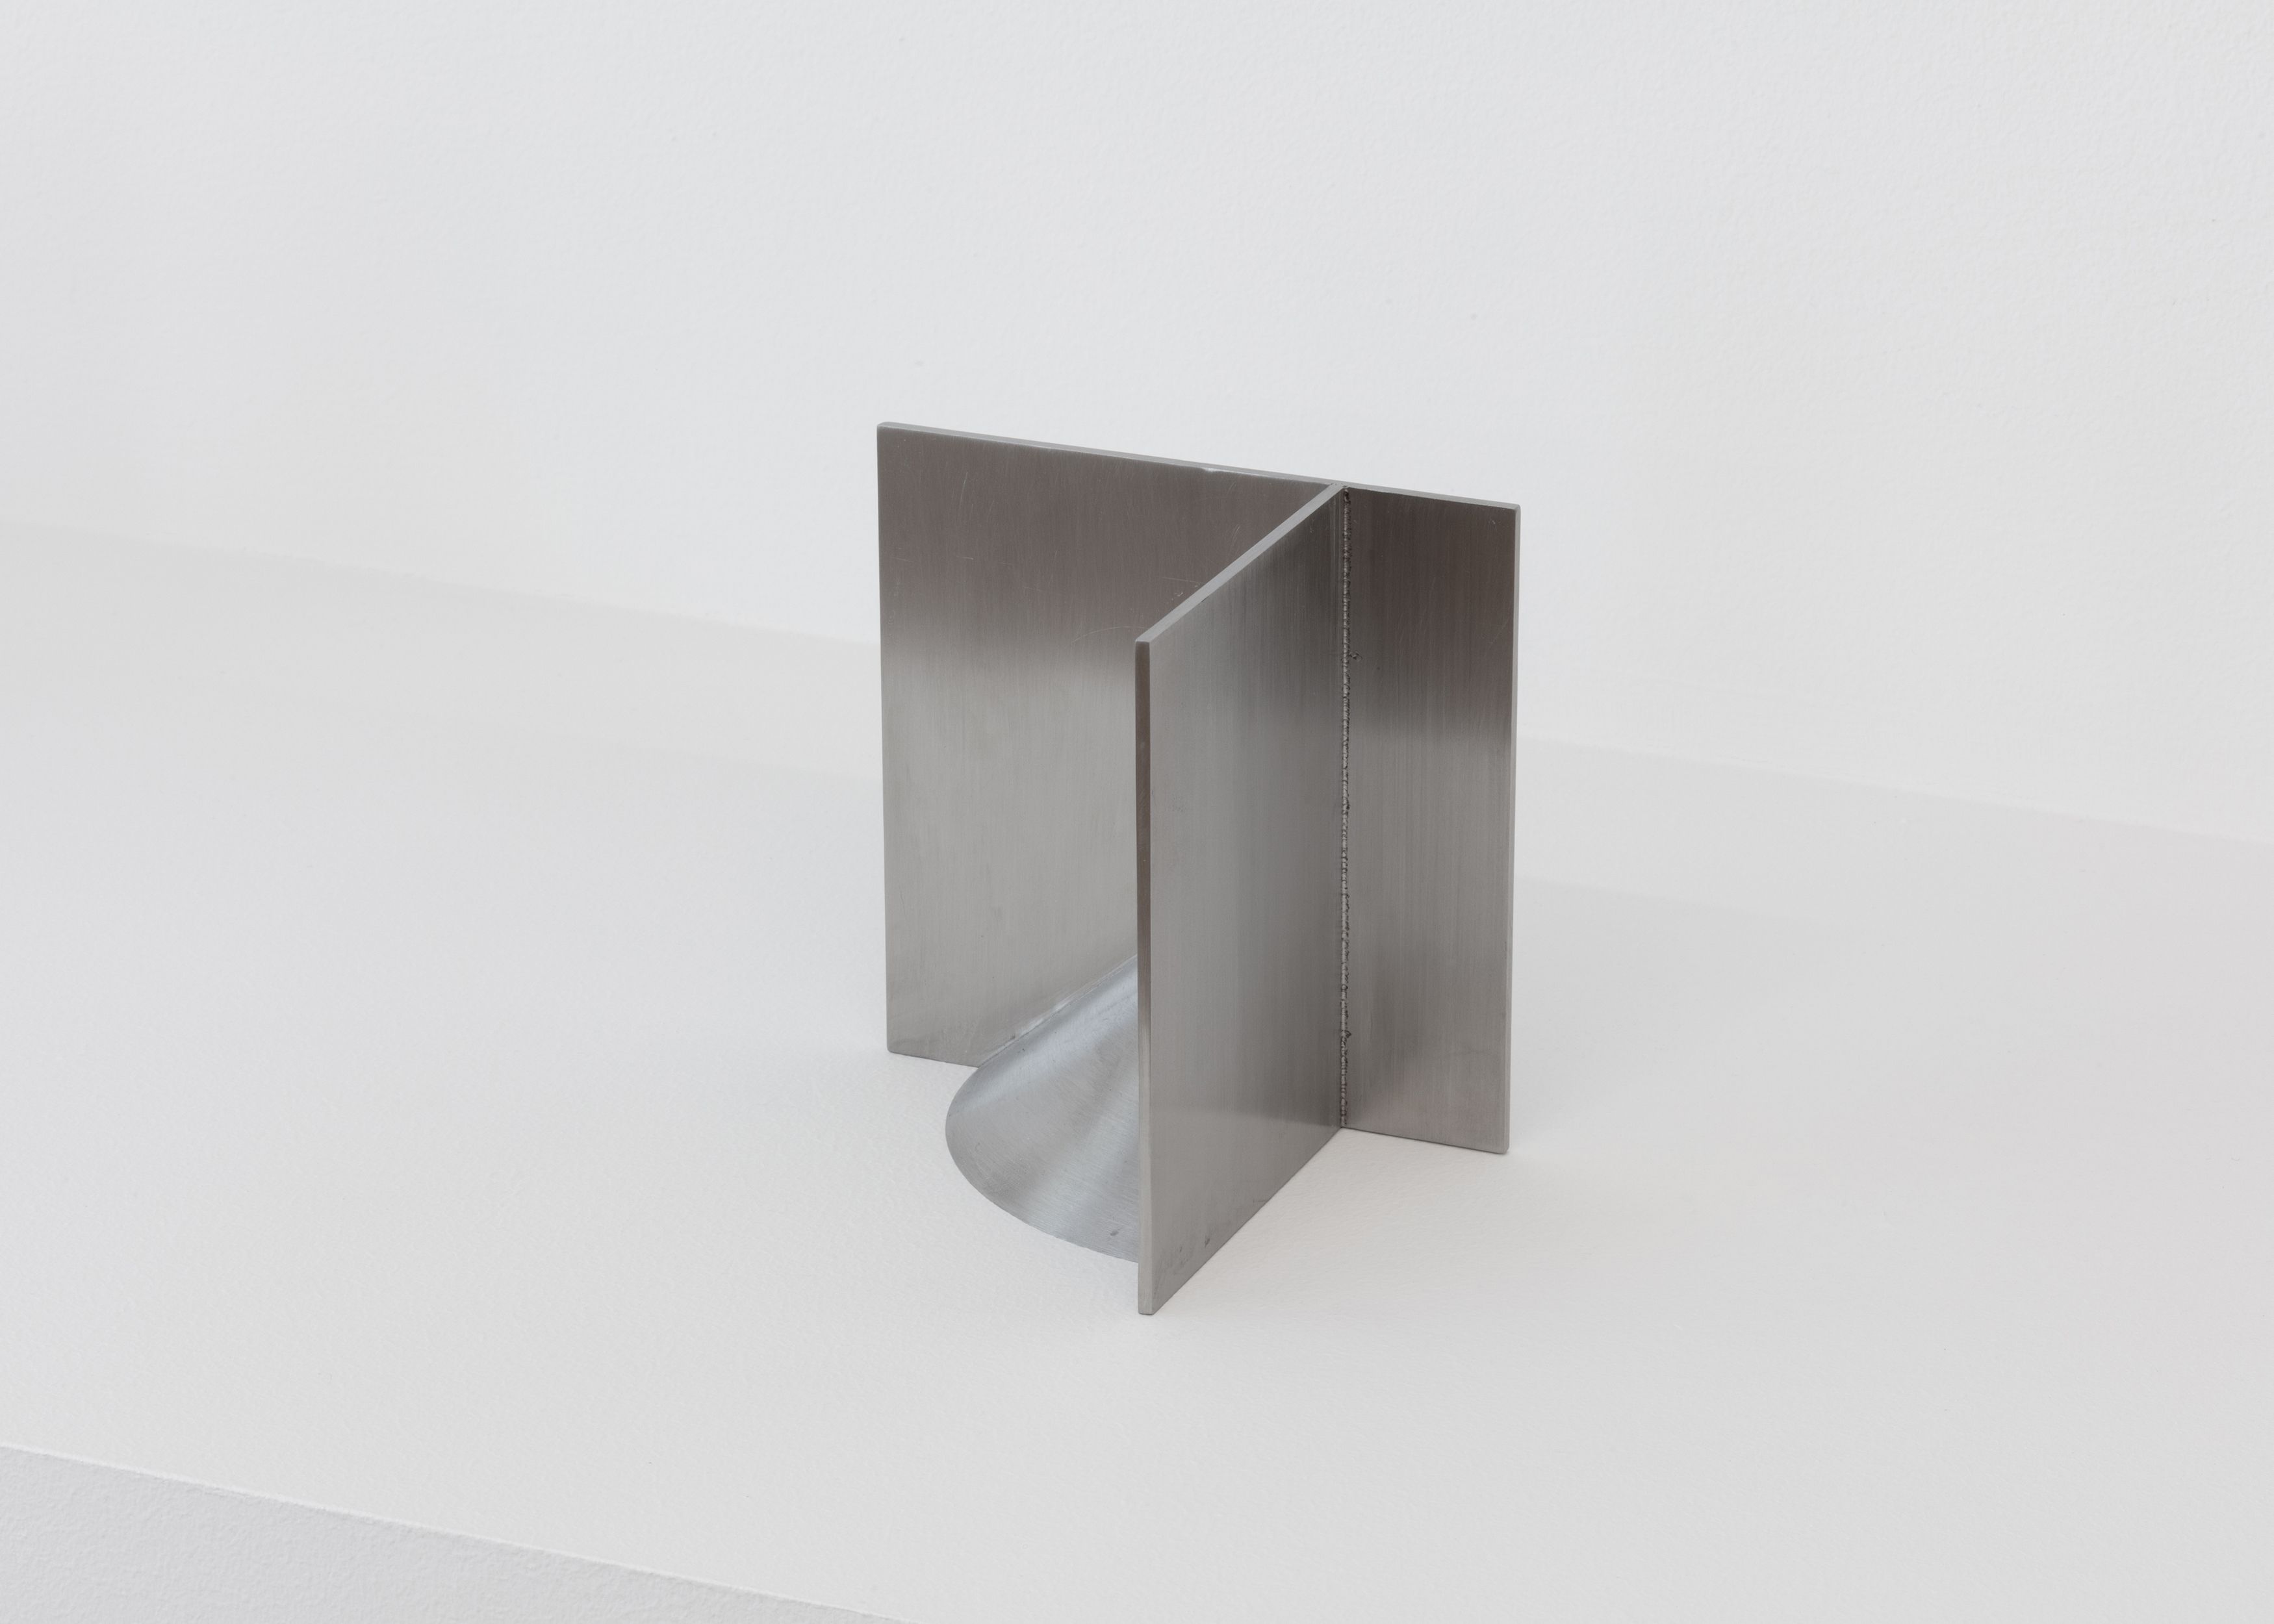 Stephen Lichty, Form 7, 2021, stainless steel, 4 x 4 x 3 in. (10.16 x 10.16 x 7.62 cm)